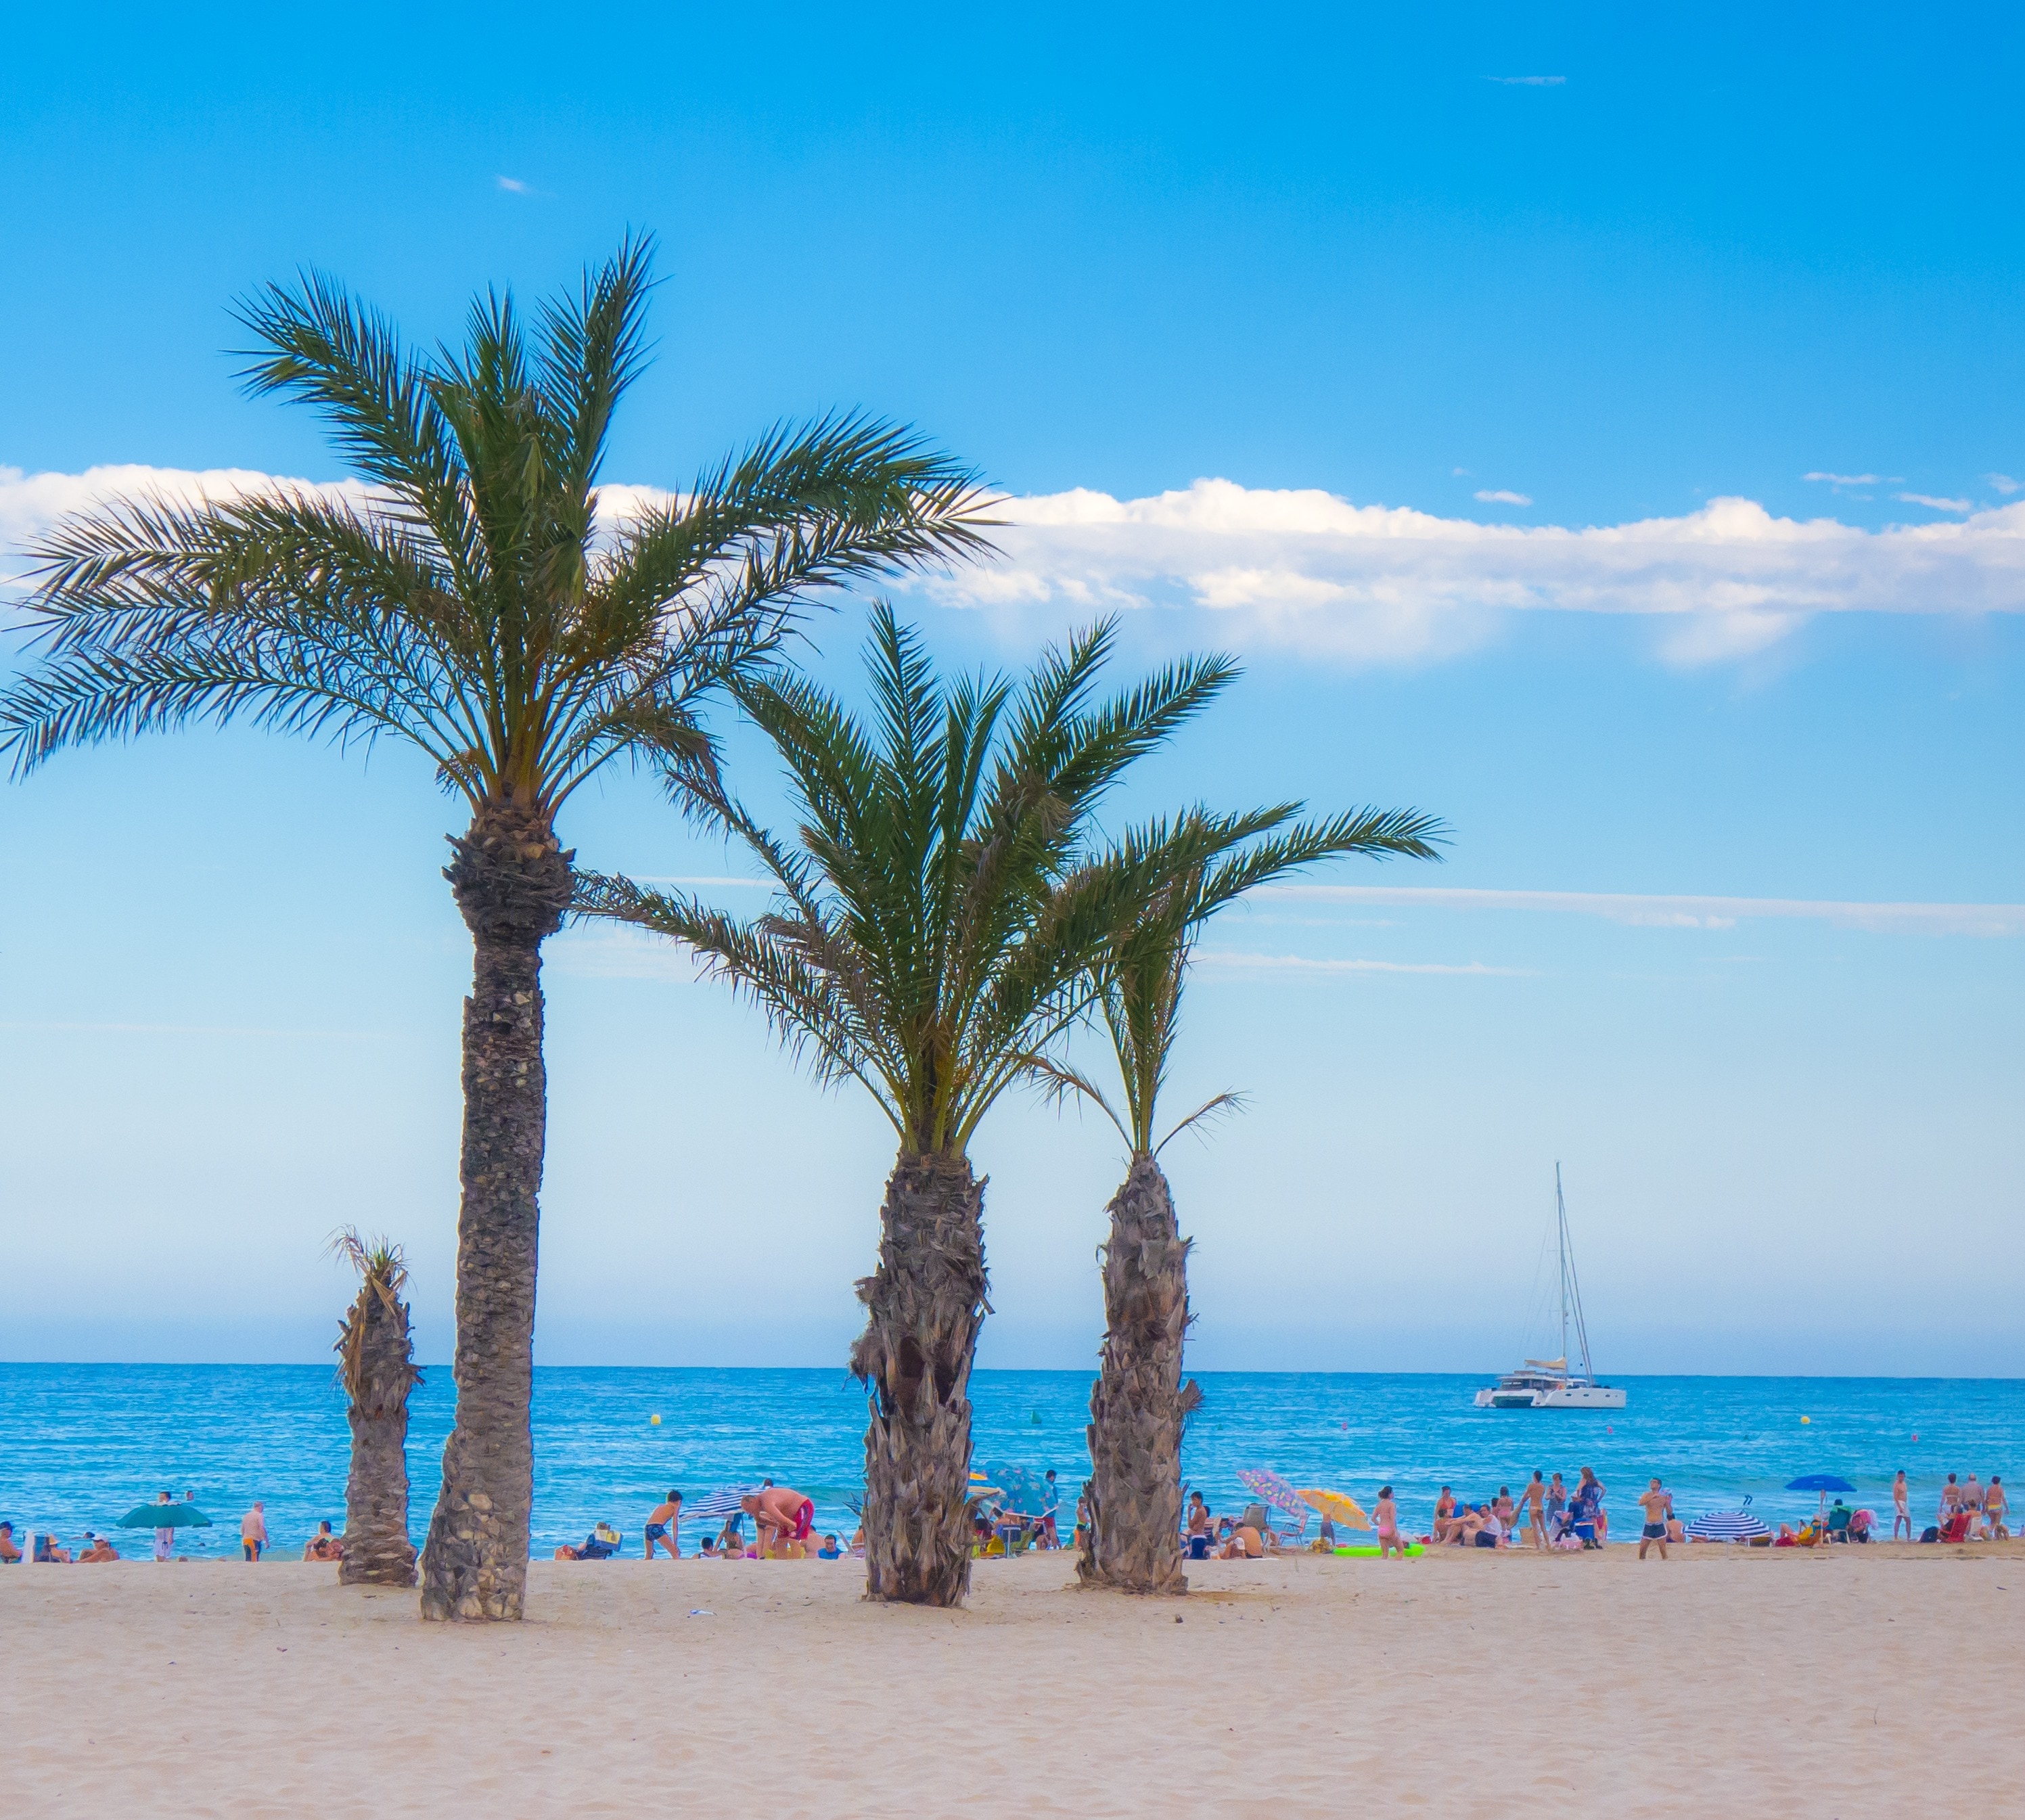 Beach, Palms, Sand, Holiday, Twilight, palm tree, beach